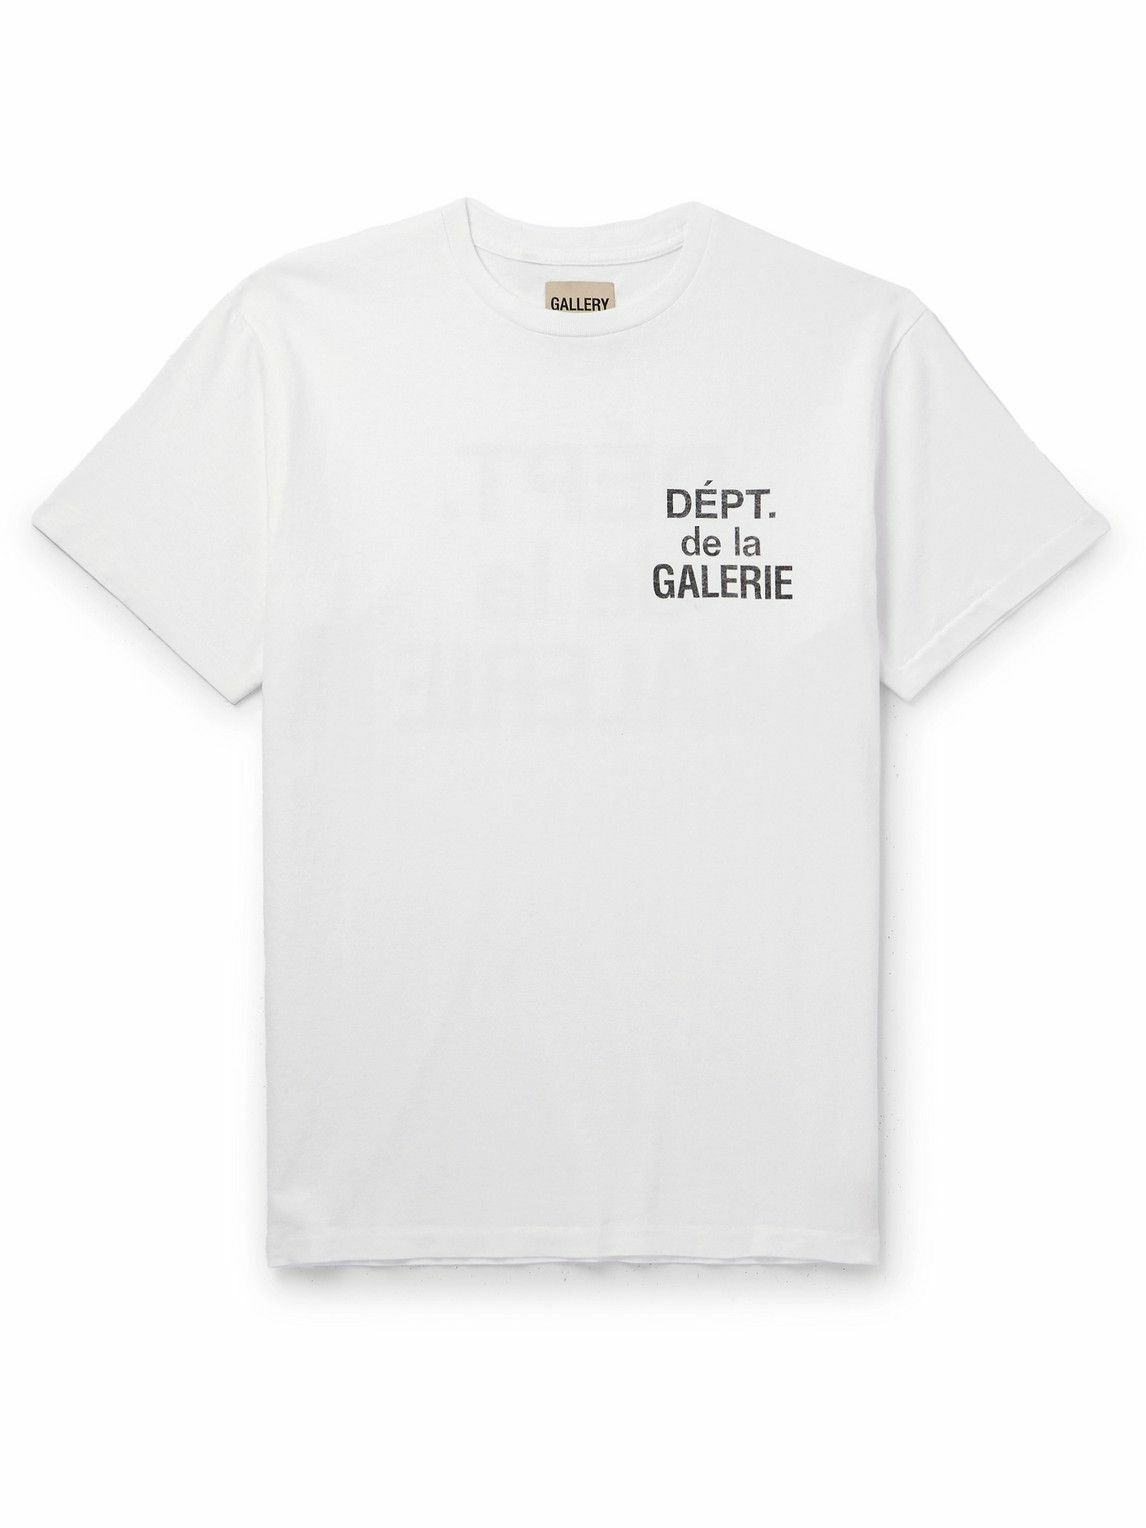 Gallery Dept. - Logo-Printed Cotton-Jersey T-Shirt - White Gallery Dept.